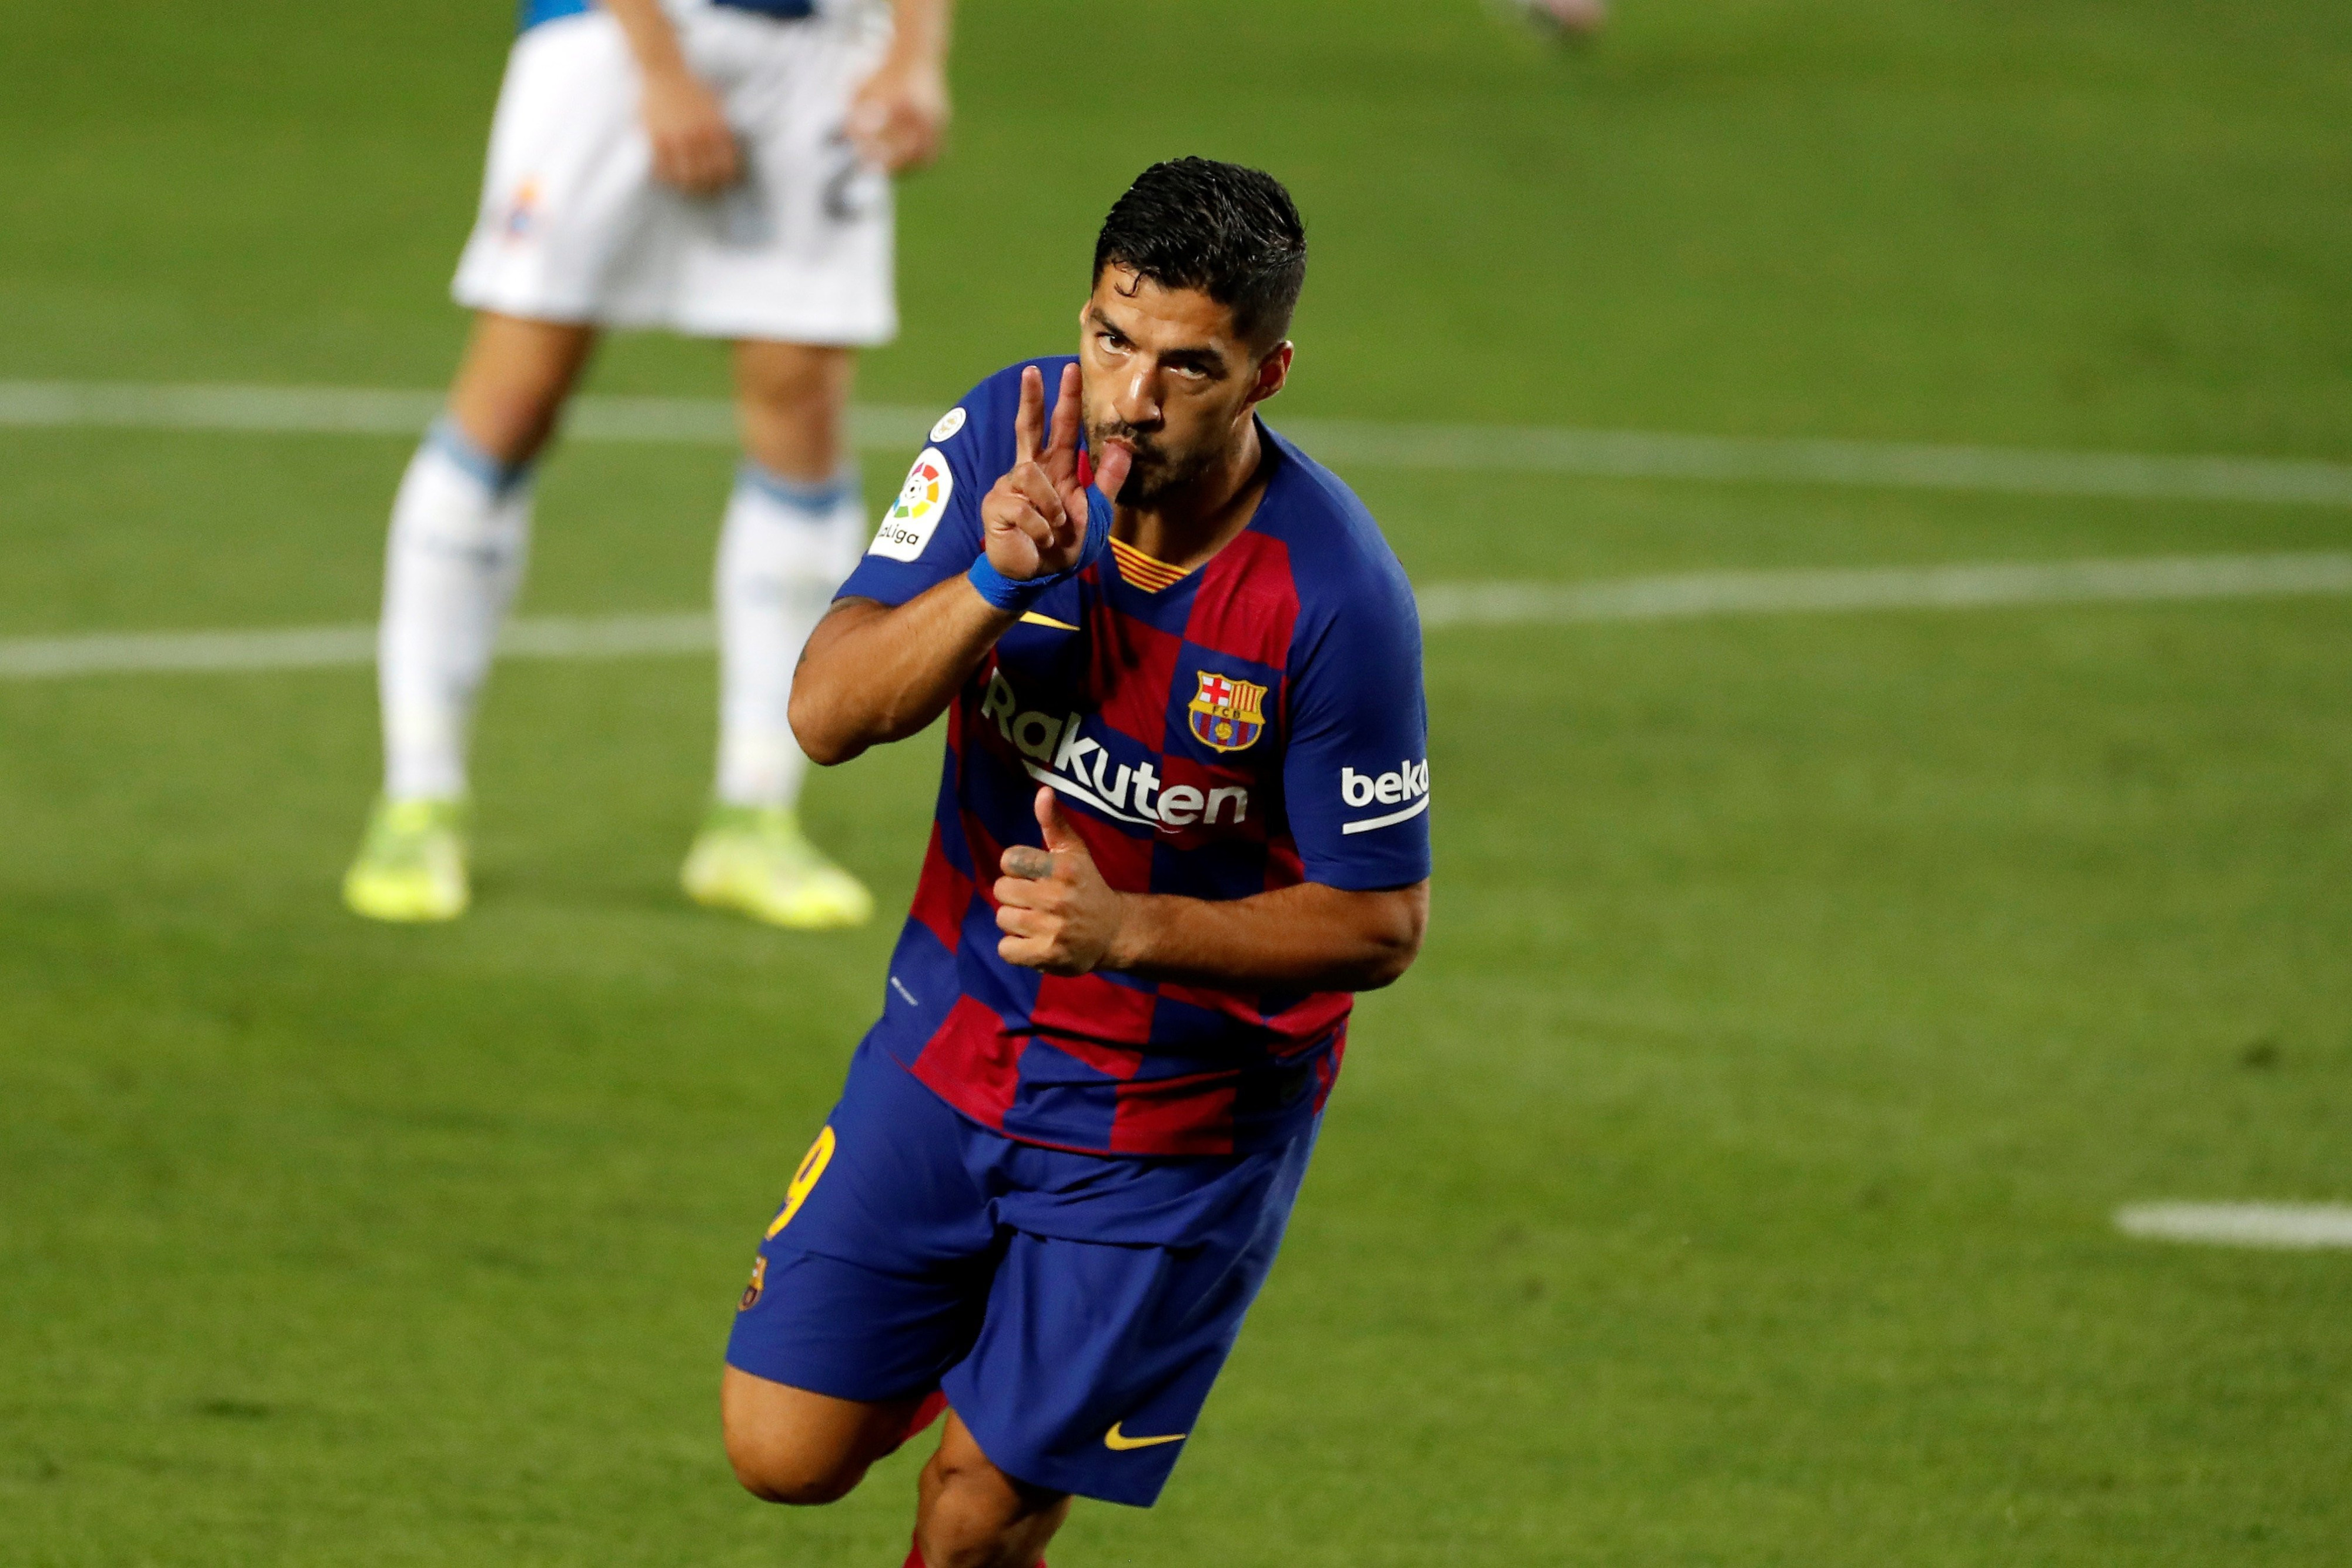 Luis Suárez celebra un gol del Barça / EFE